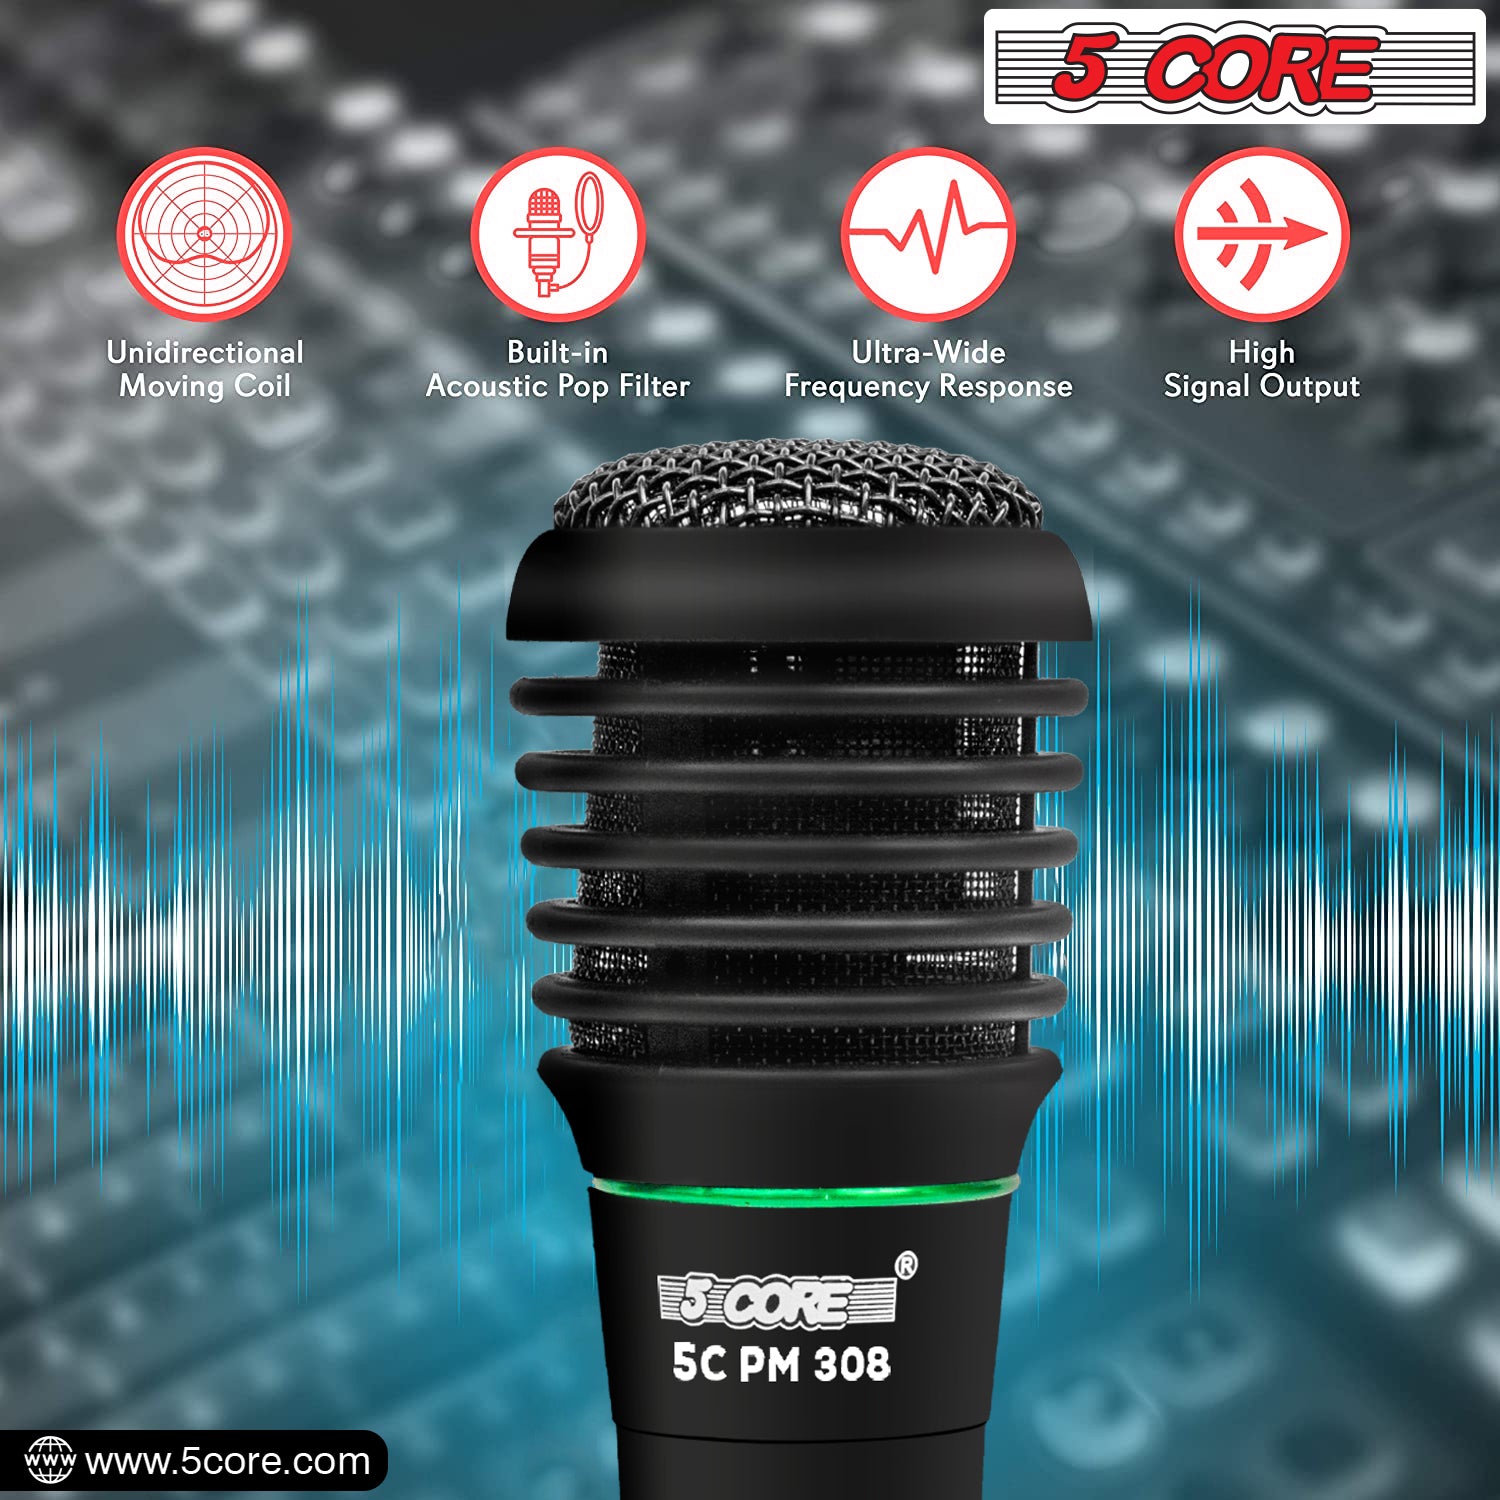 Enhanced Clarity: XLR Microphone for Studio-Quality Sound